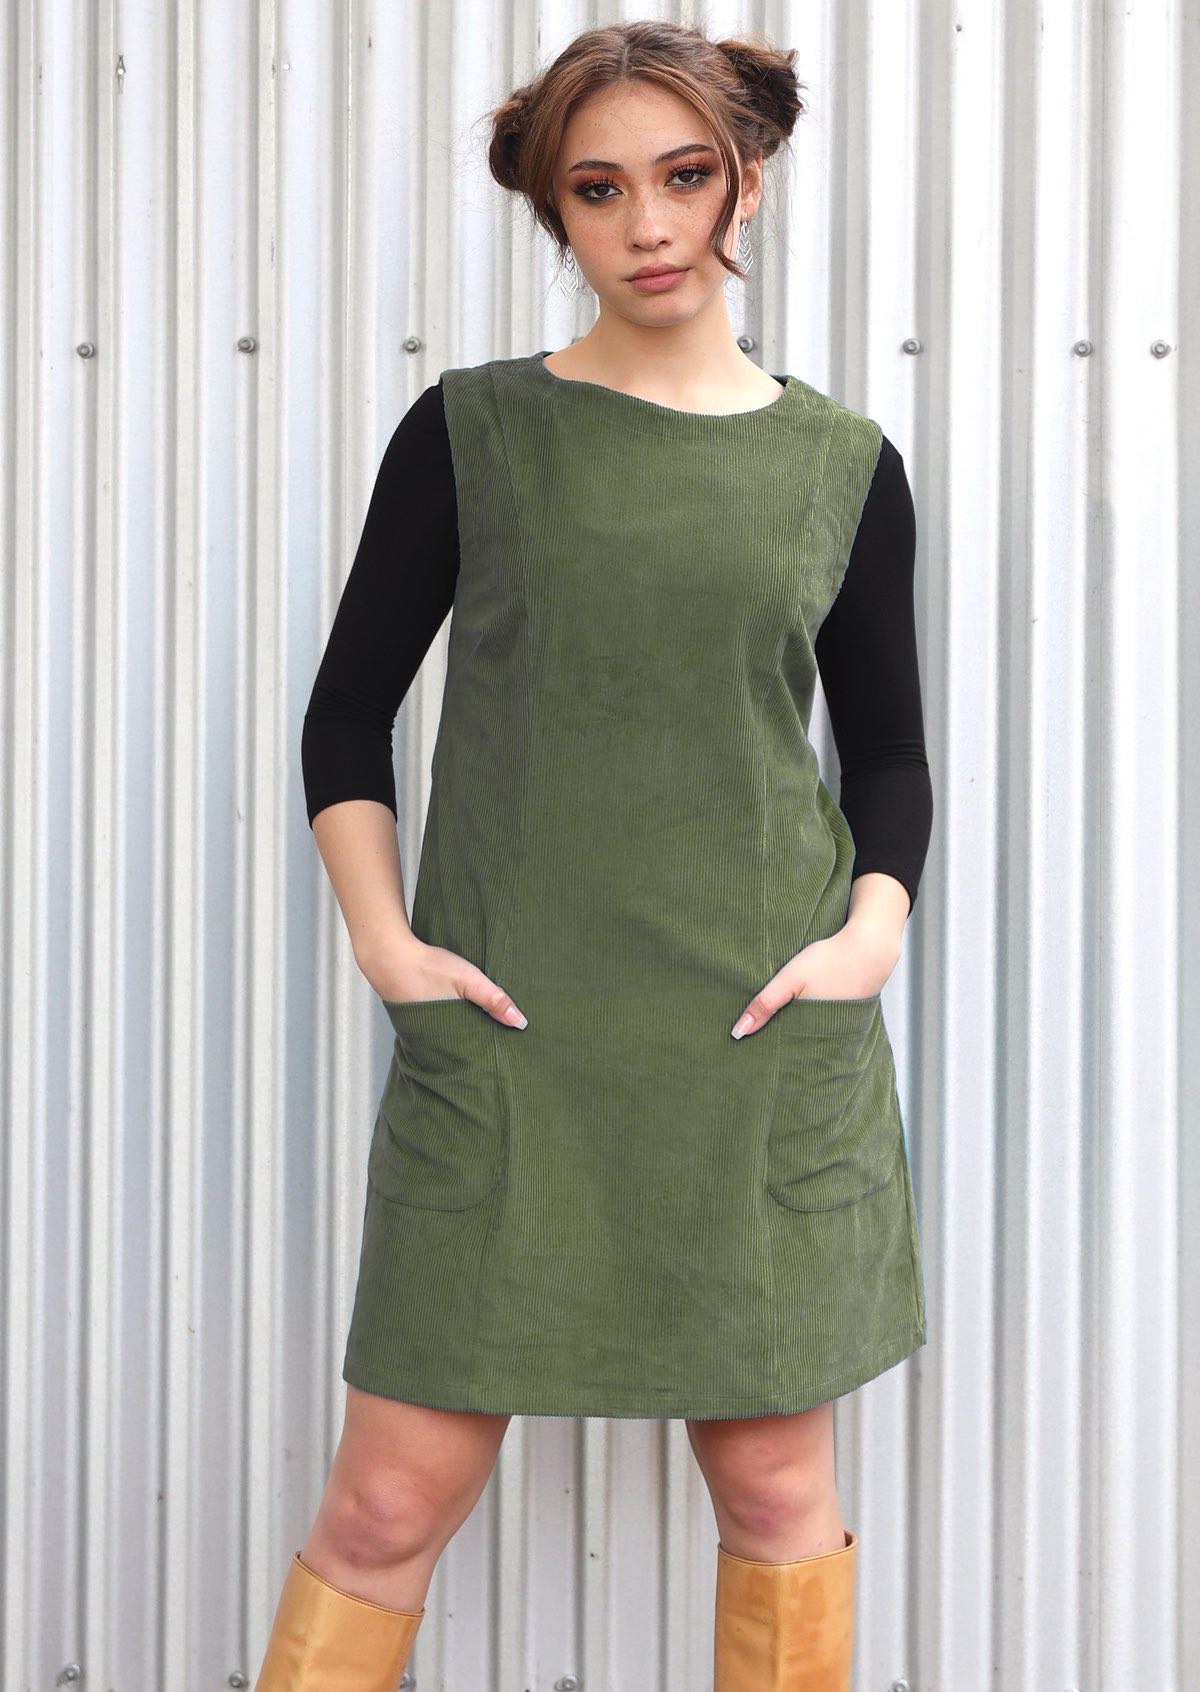 Polly Pocket Cord Tunic Dress shapely bodice a-line skirt high round neck sleeveless front pockets above knee length 100% cotton corduroy olive green | Karma East Australia